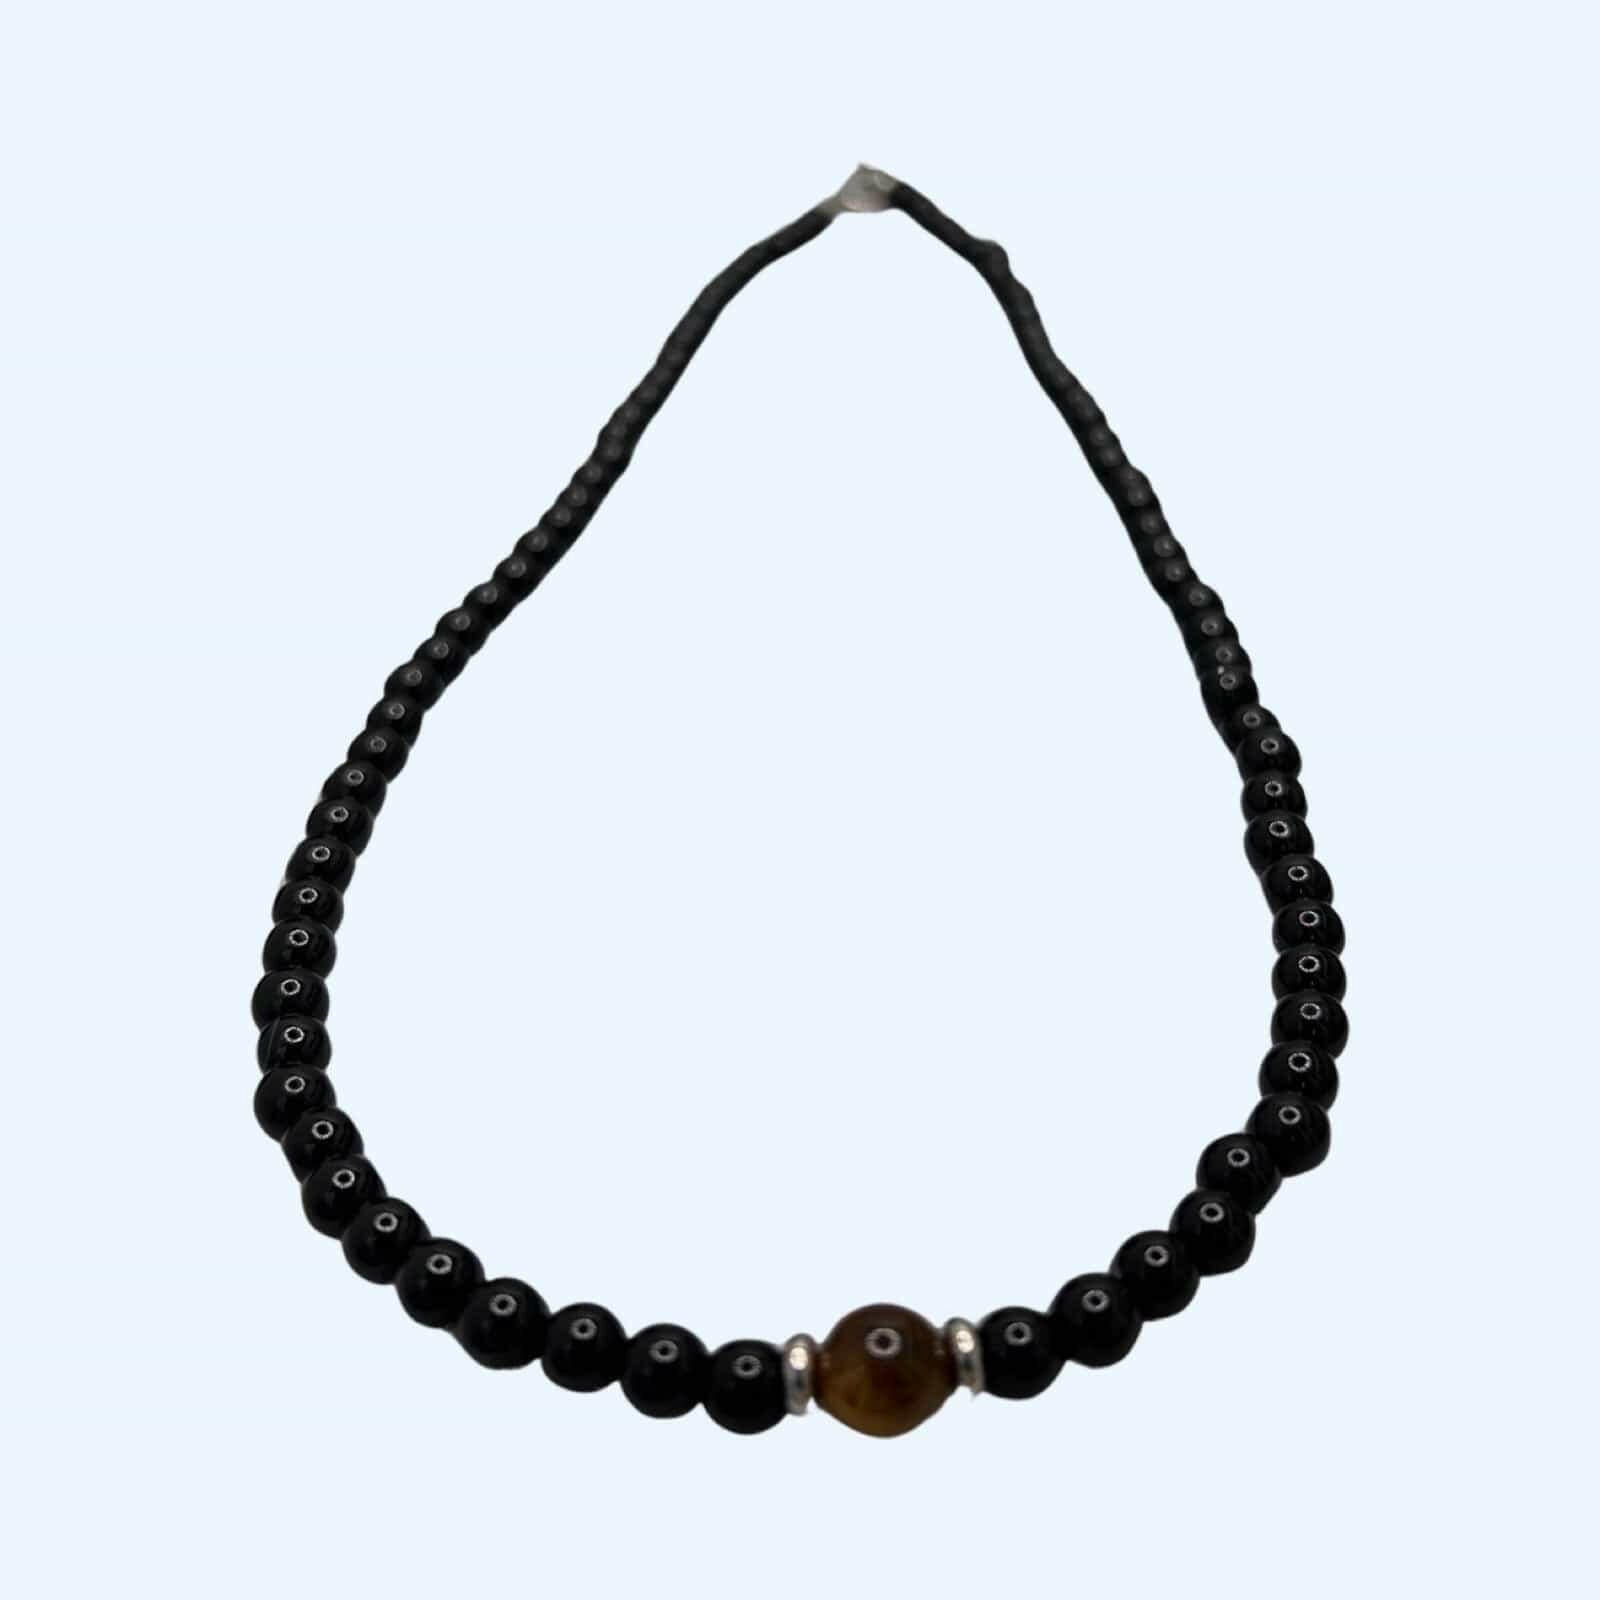 Elegant Onyx Necklace with Tiger Eye Pendant - Stylish Jewelry for Women